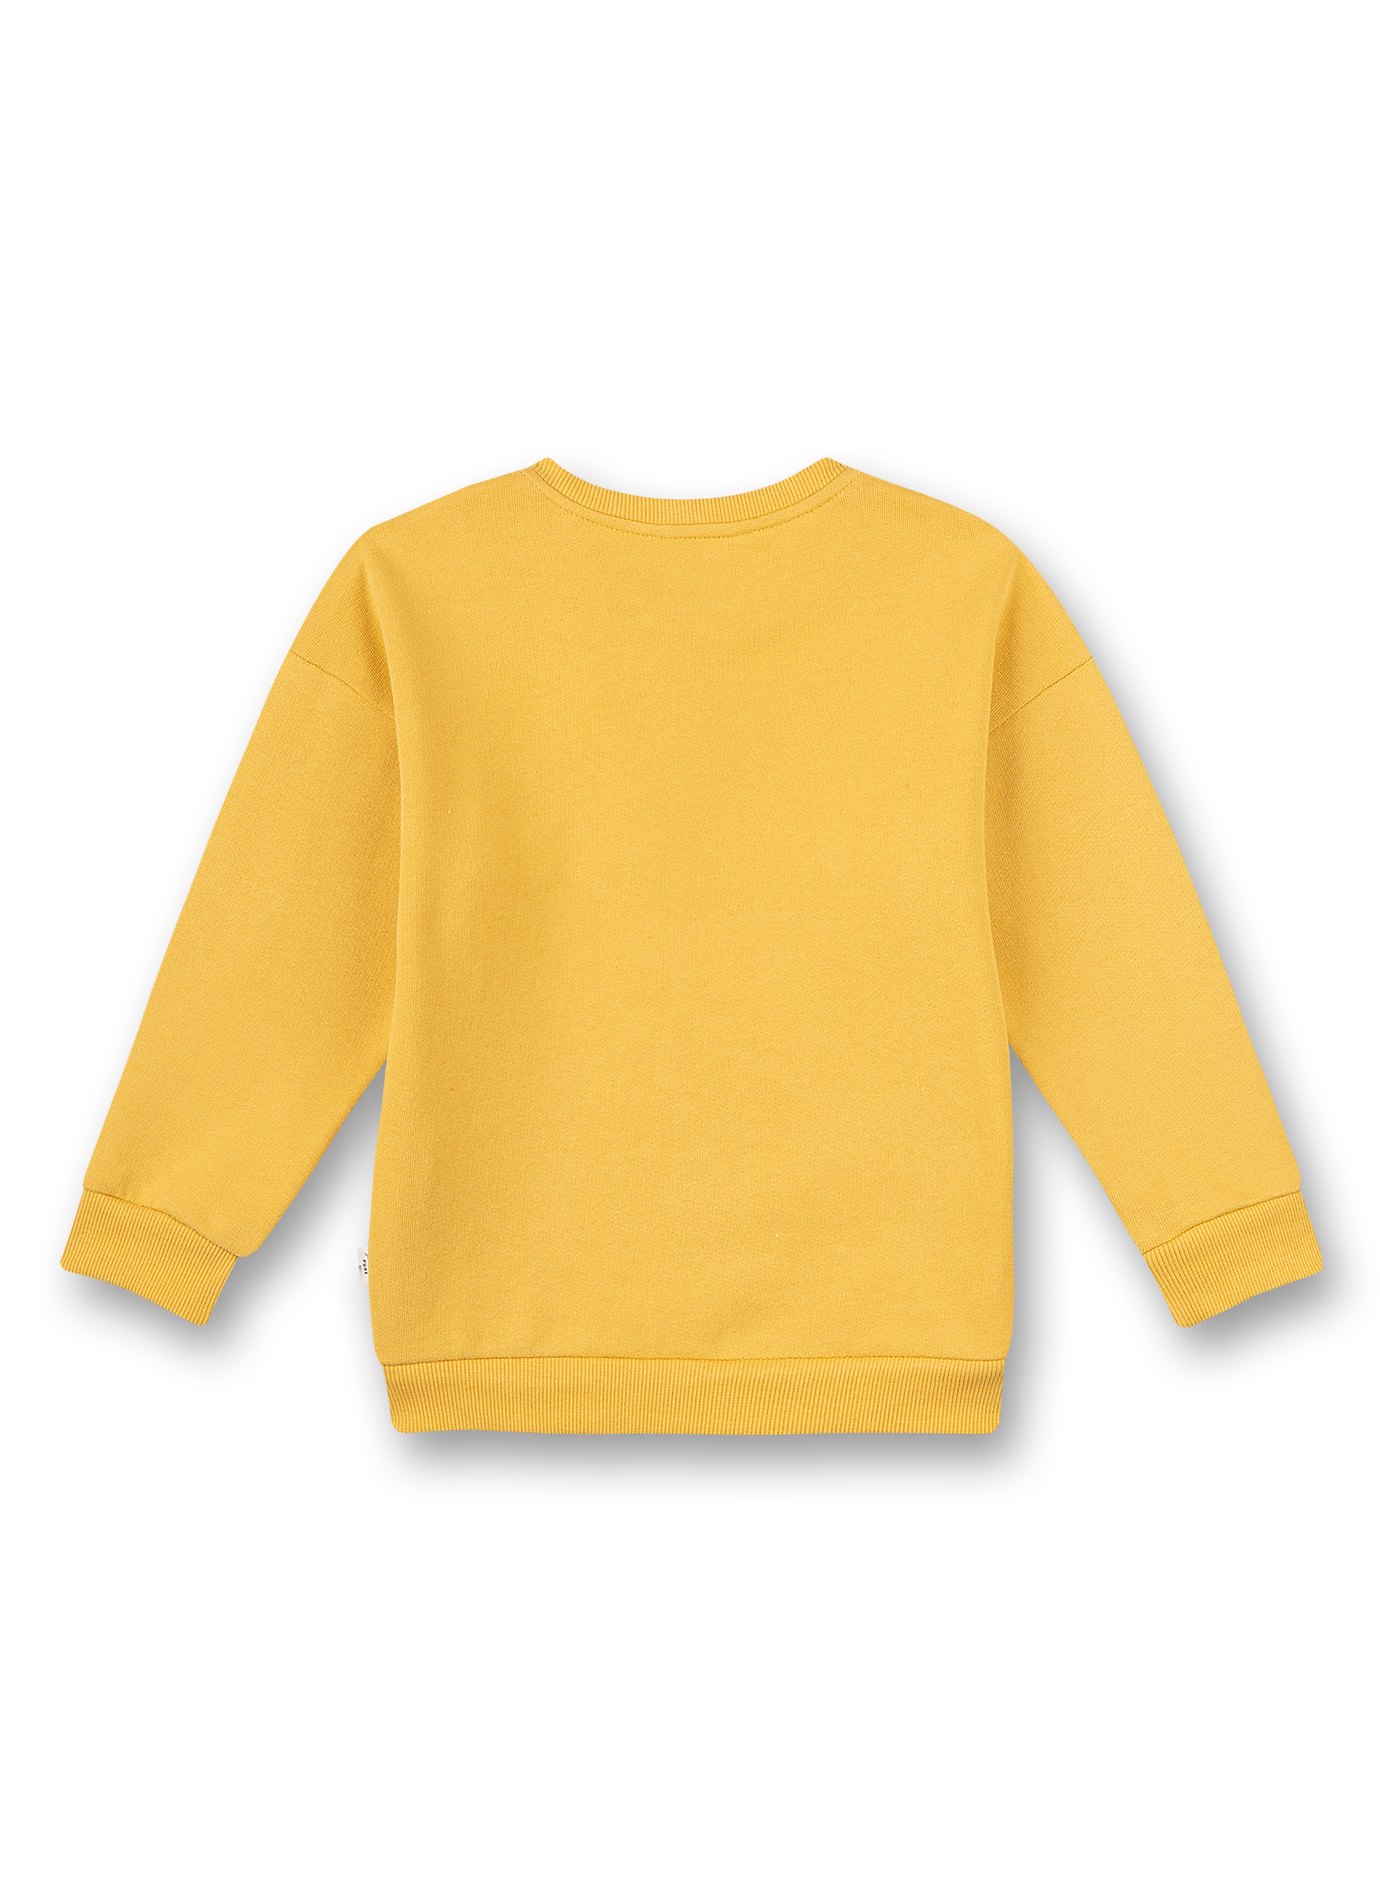 Unisex-Sweatshirt Gelb